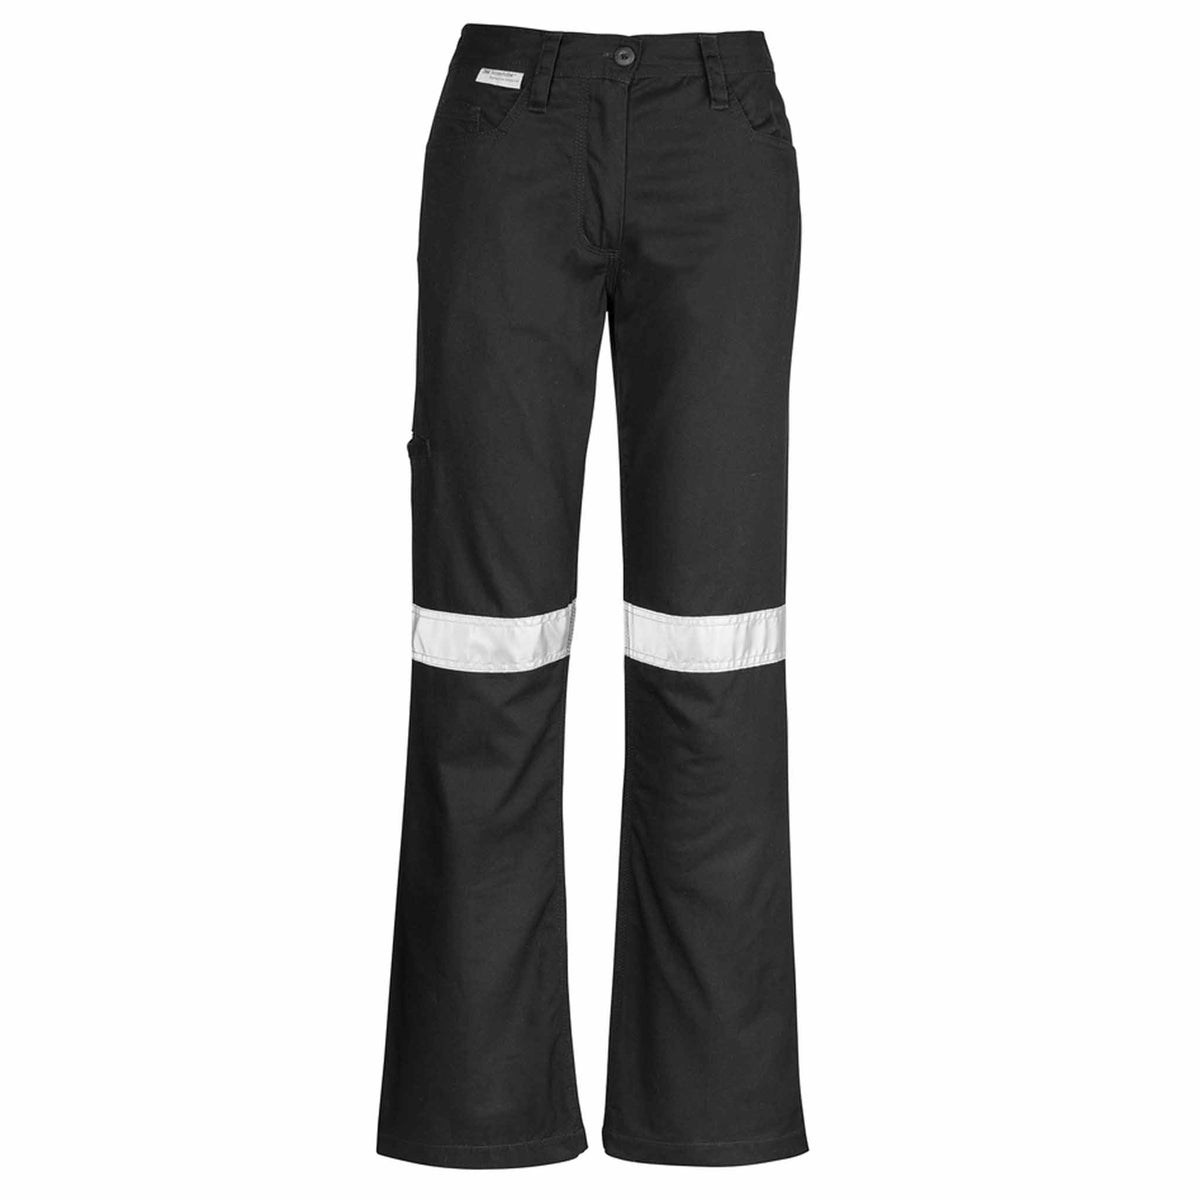 wybzd Women Casual Stretchy Pants Work Business Slacks Dress Pants Straight  Leg Trousers with Pockets Black S - Walmart.com